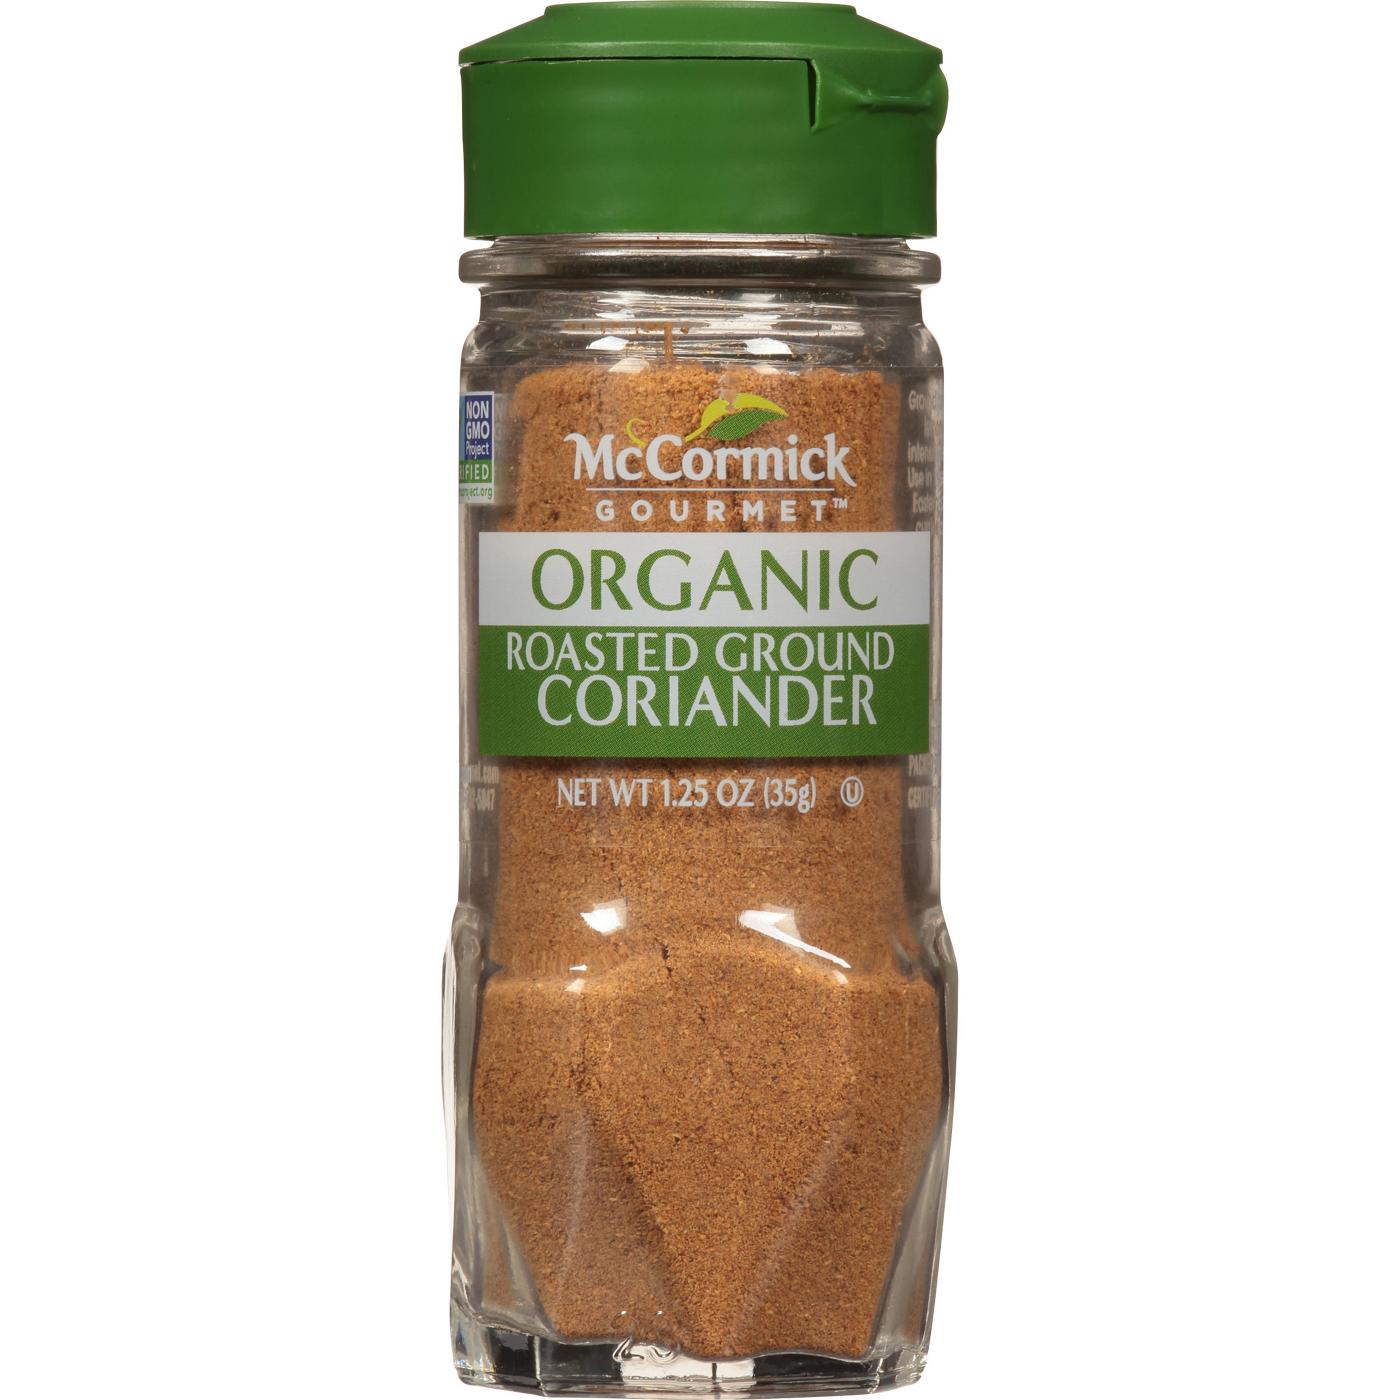 McCormick Gourmet Roasted Ground Coriander; image 1 of 5